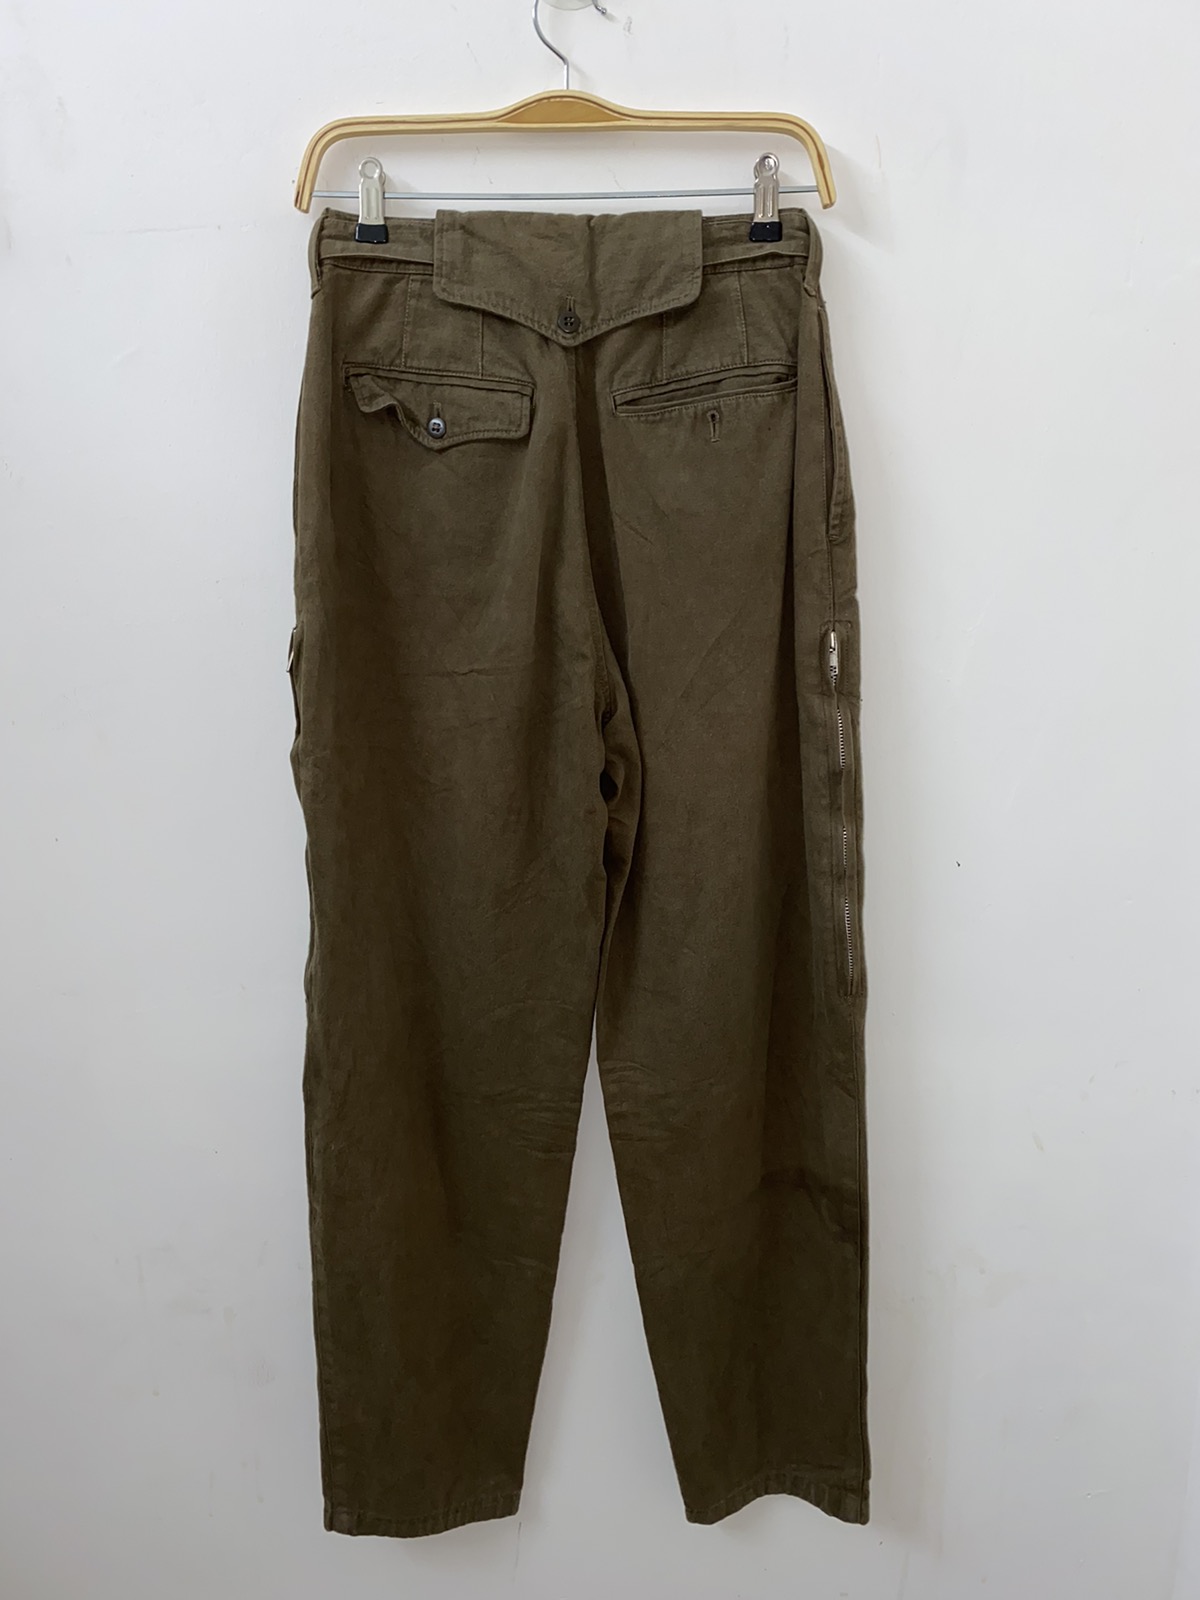 Vintage Abahouse Military Pant - 4